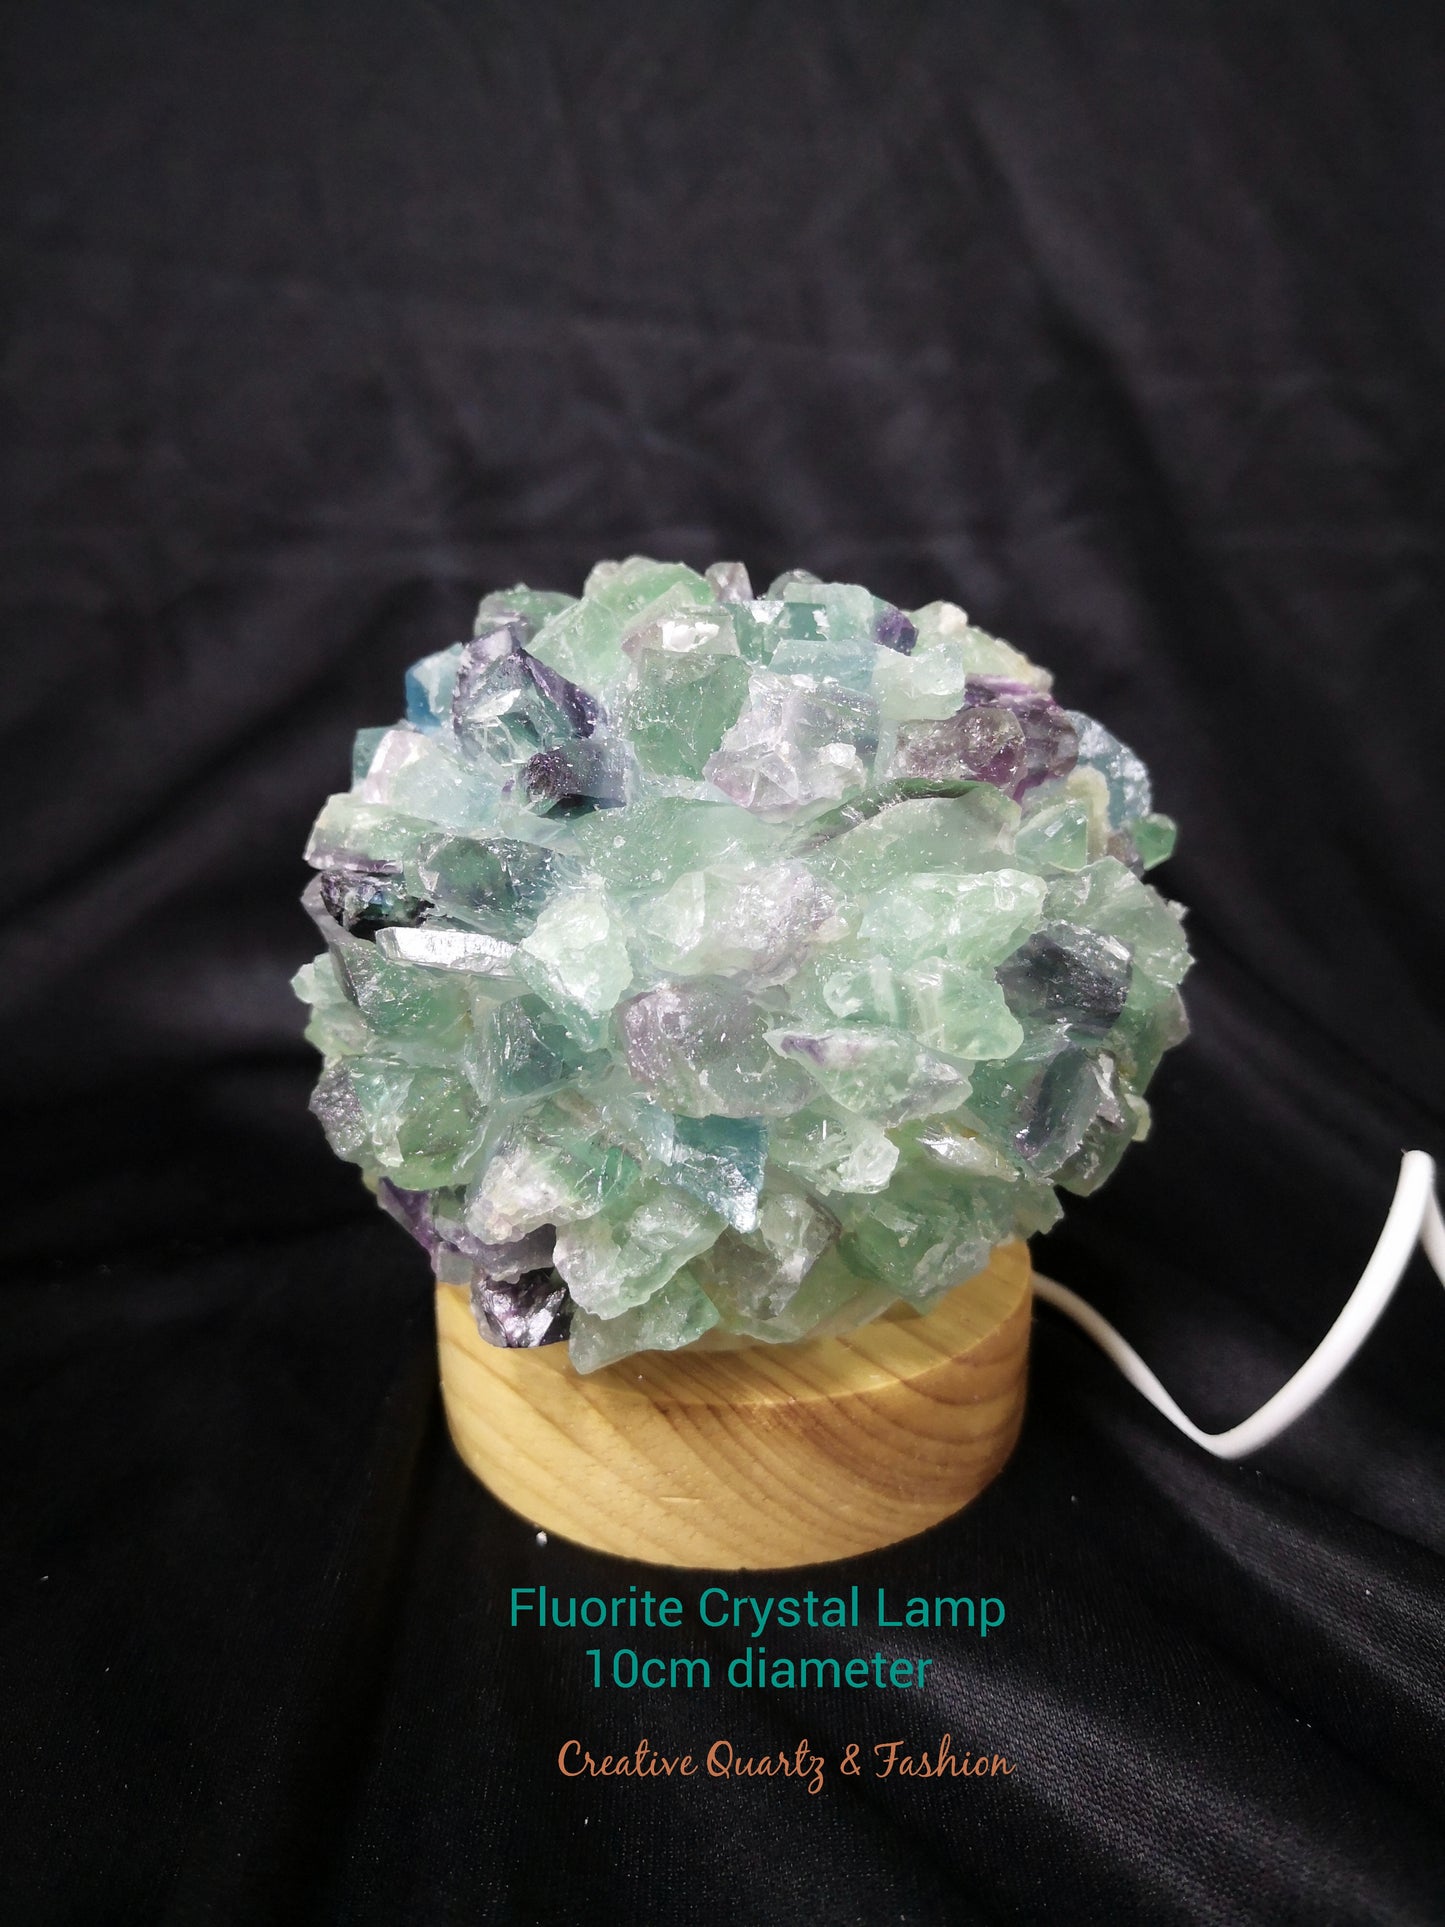 Flourite Crystal Lamp